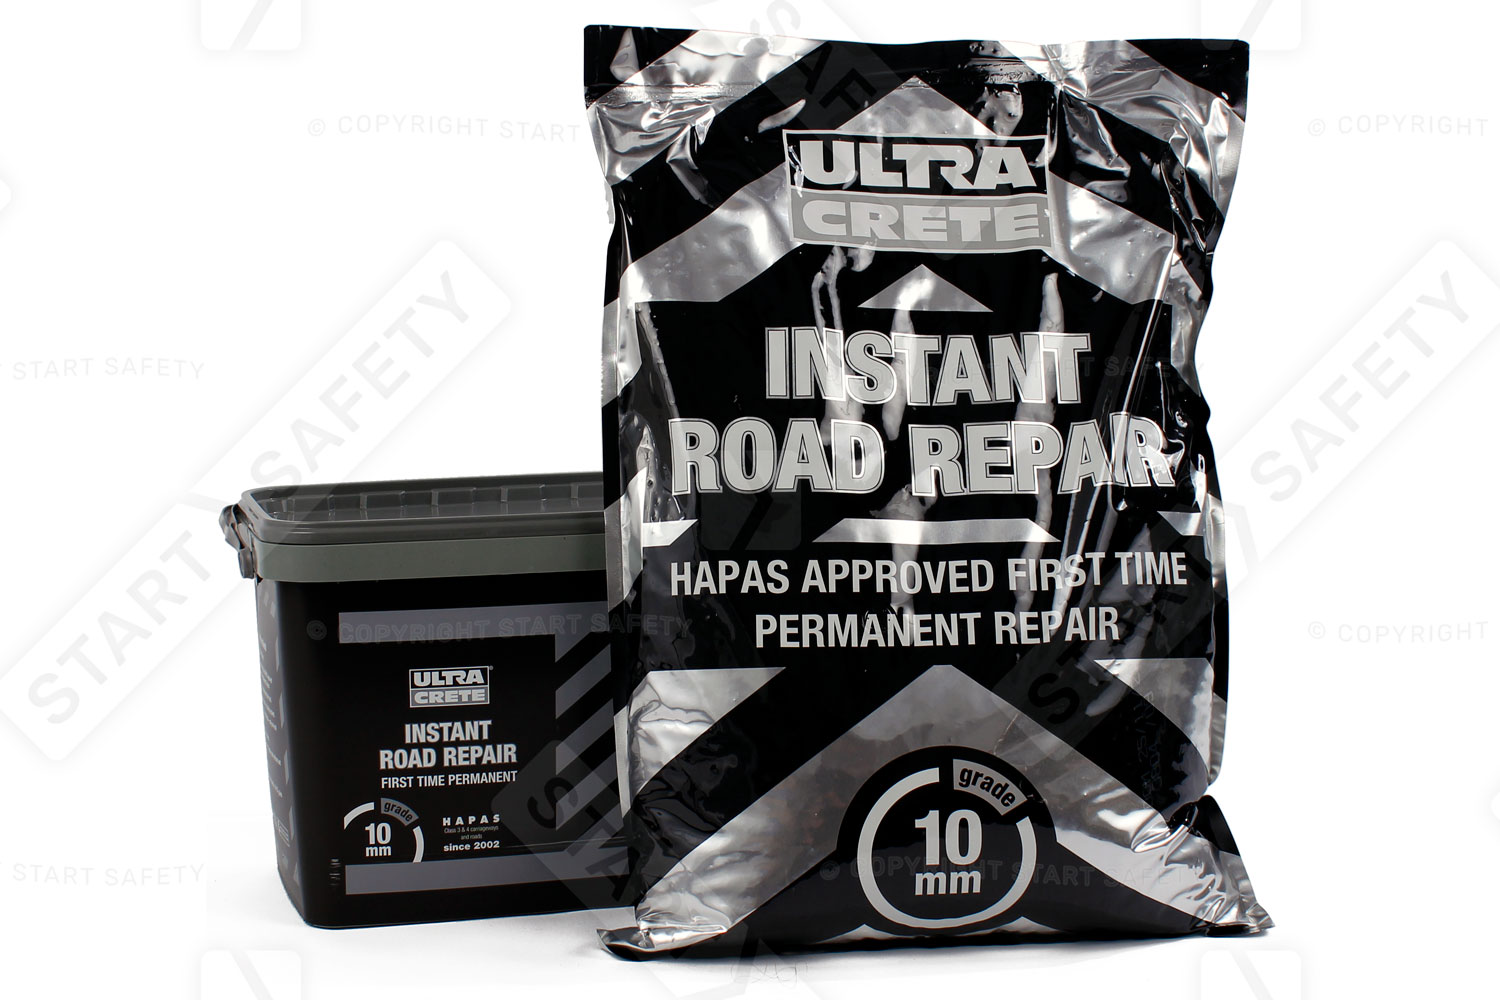 Ultracrete Instant Pothole Repair Tub & Bag